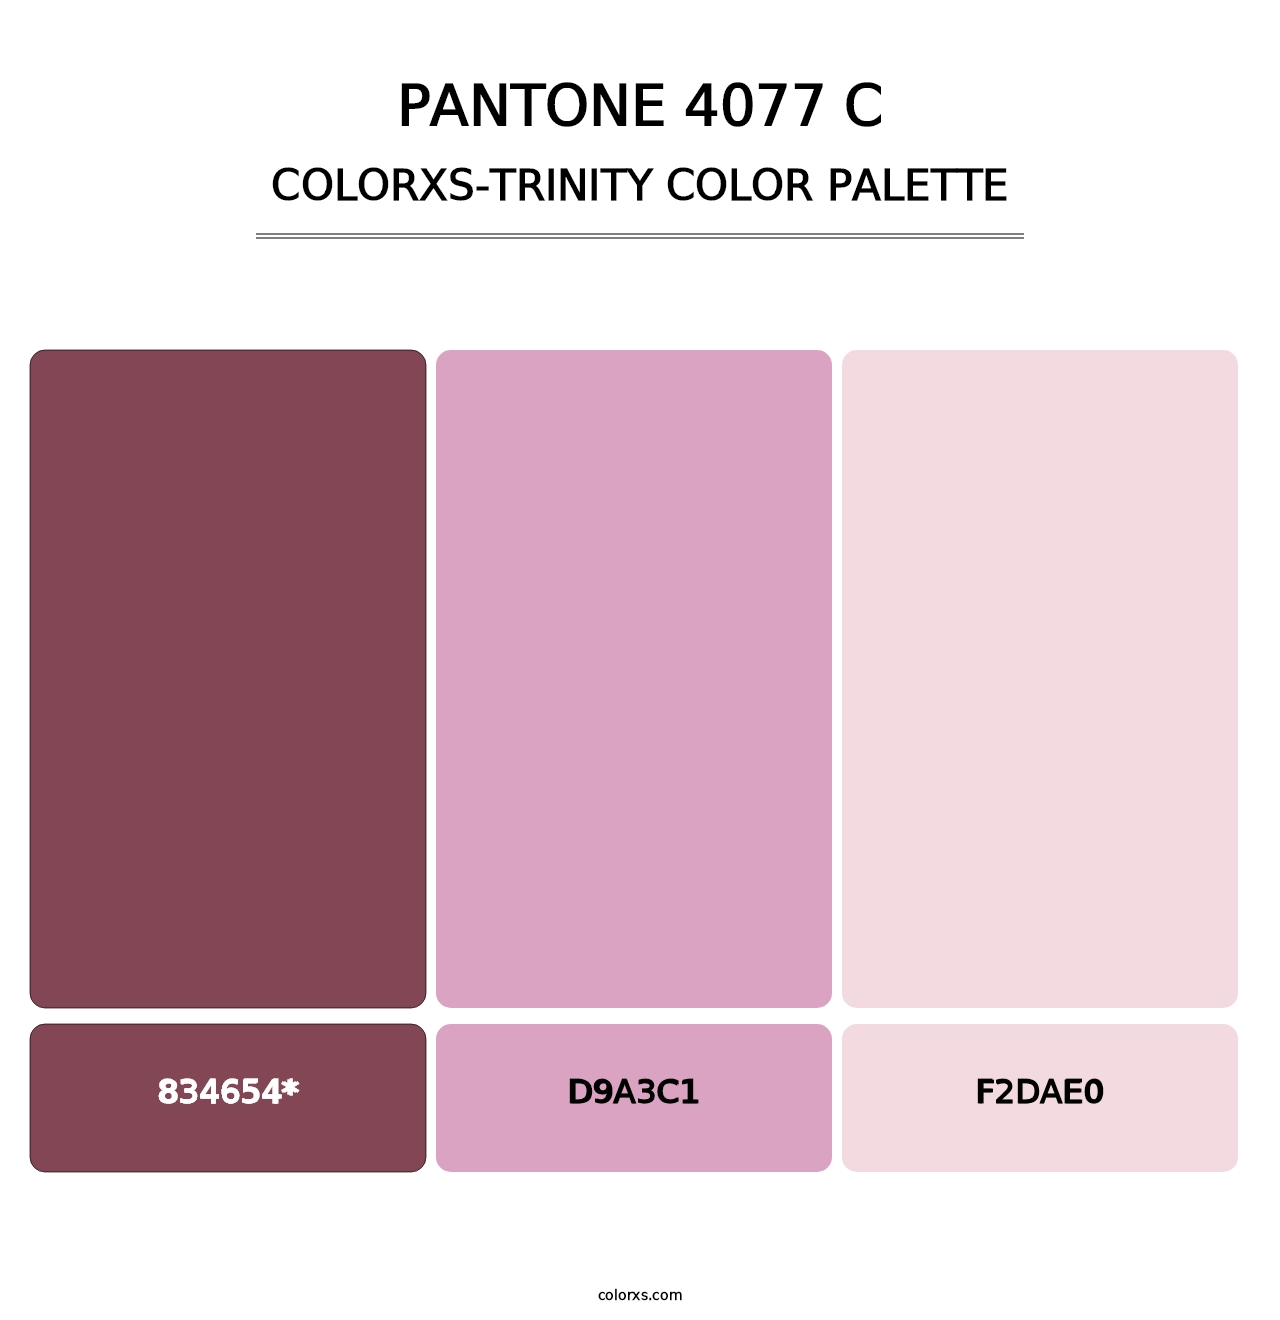 PANTONE 4077 C - Colorxs Trinity Palette